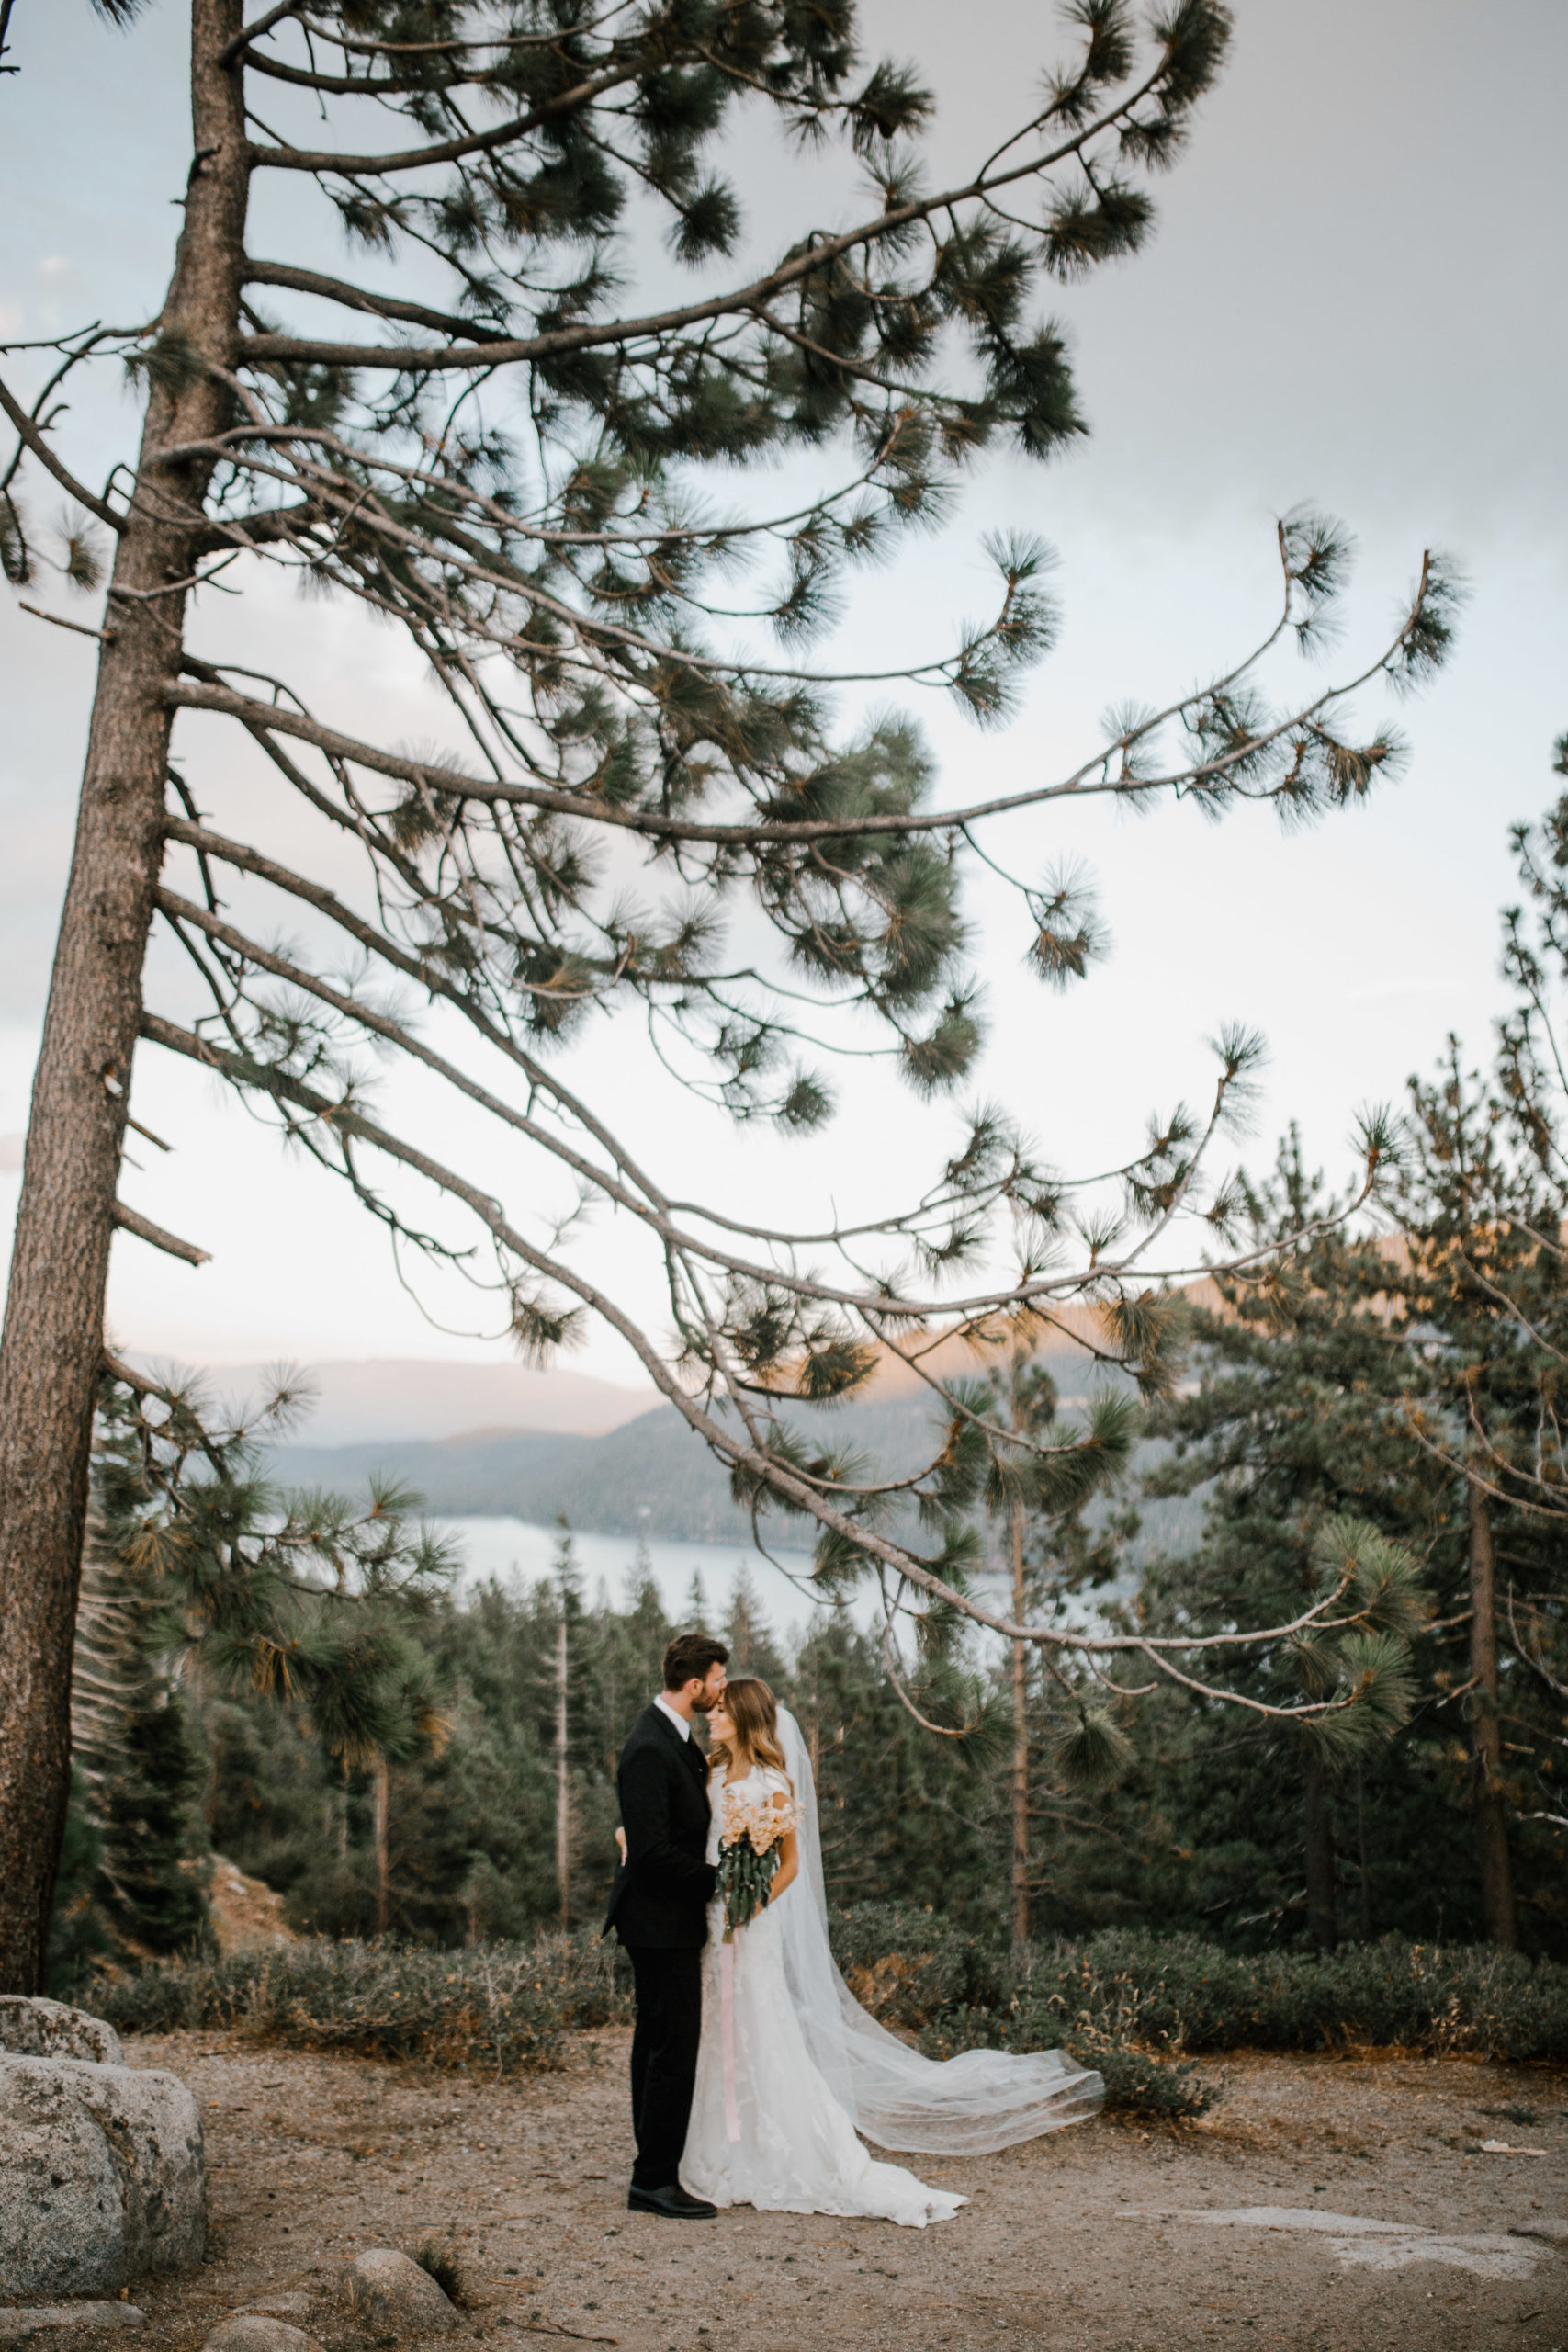 Sacramento wedding photographer captures adventure wedding with bride and groom standing under a tree